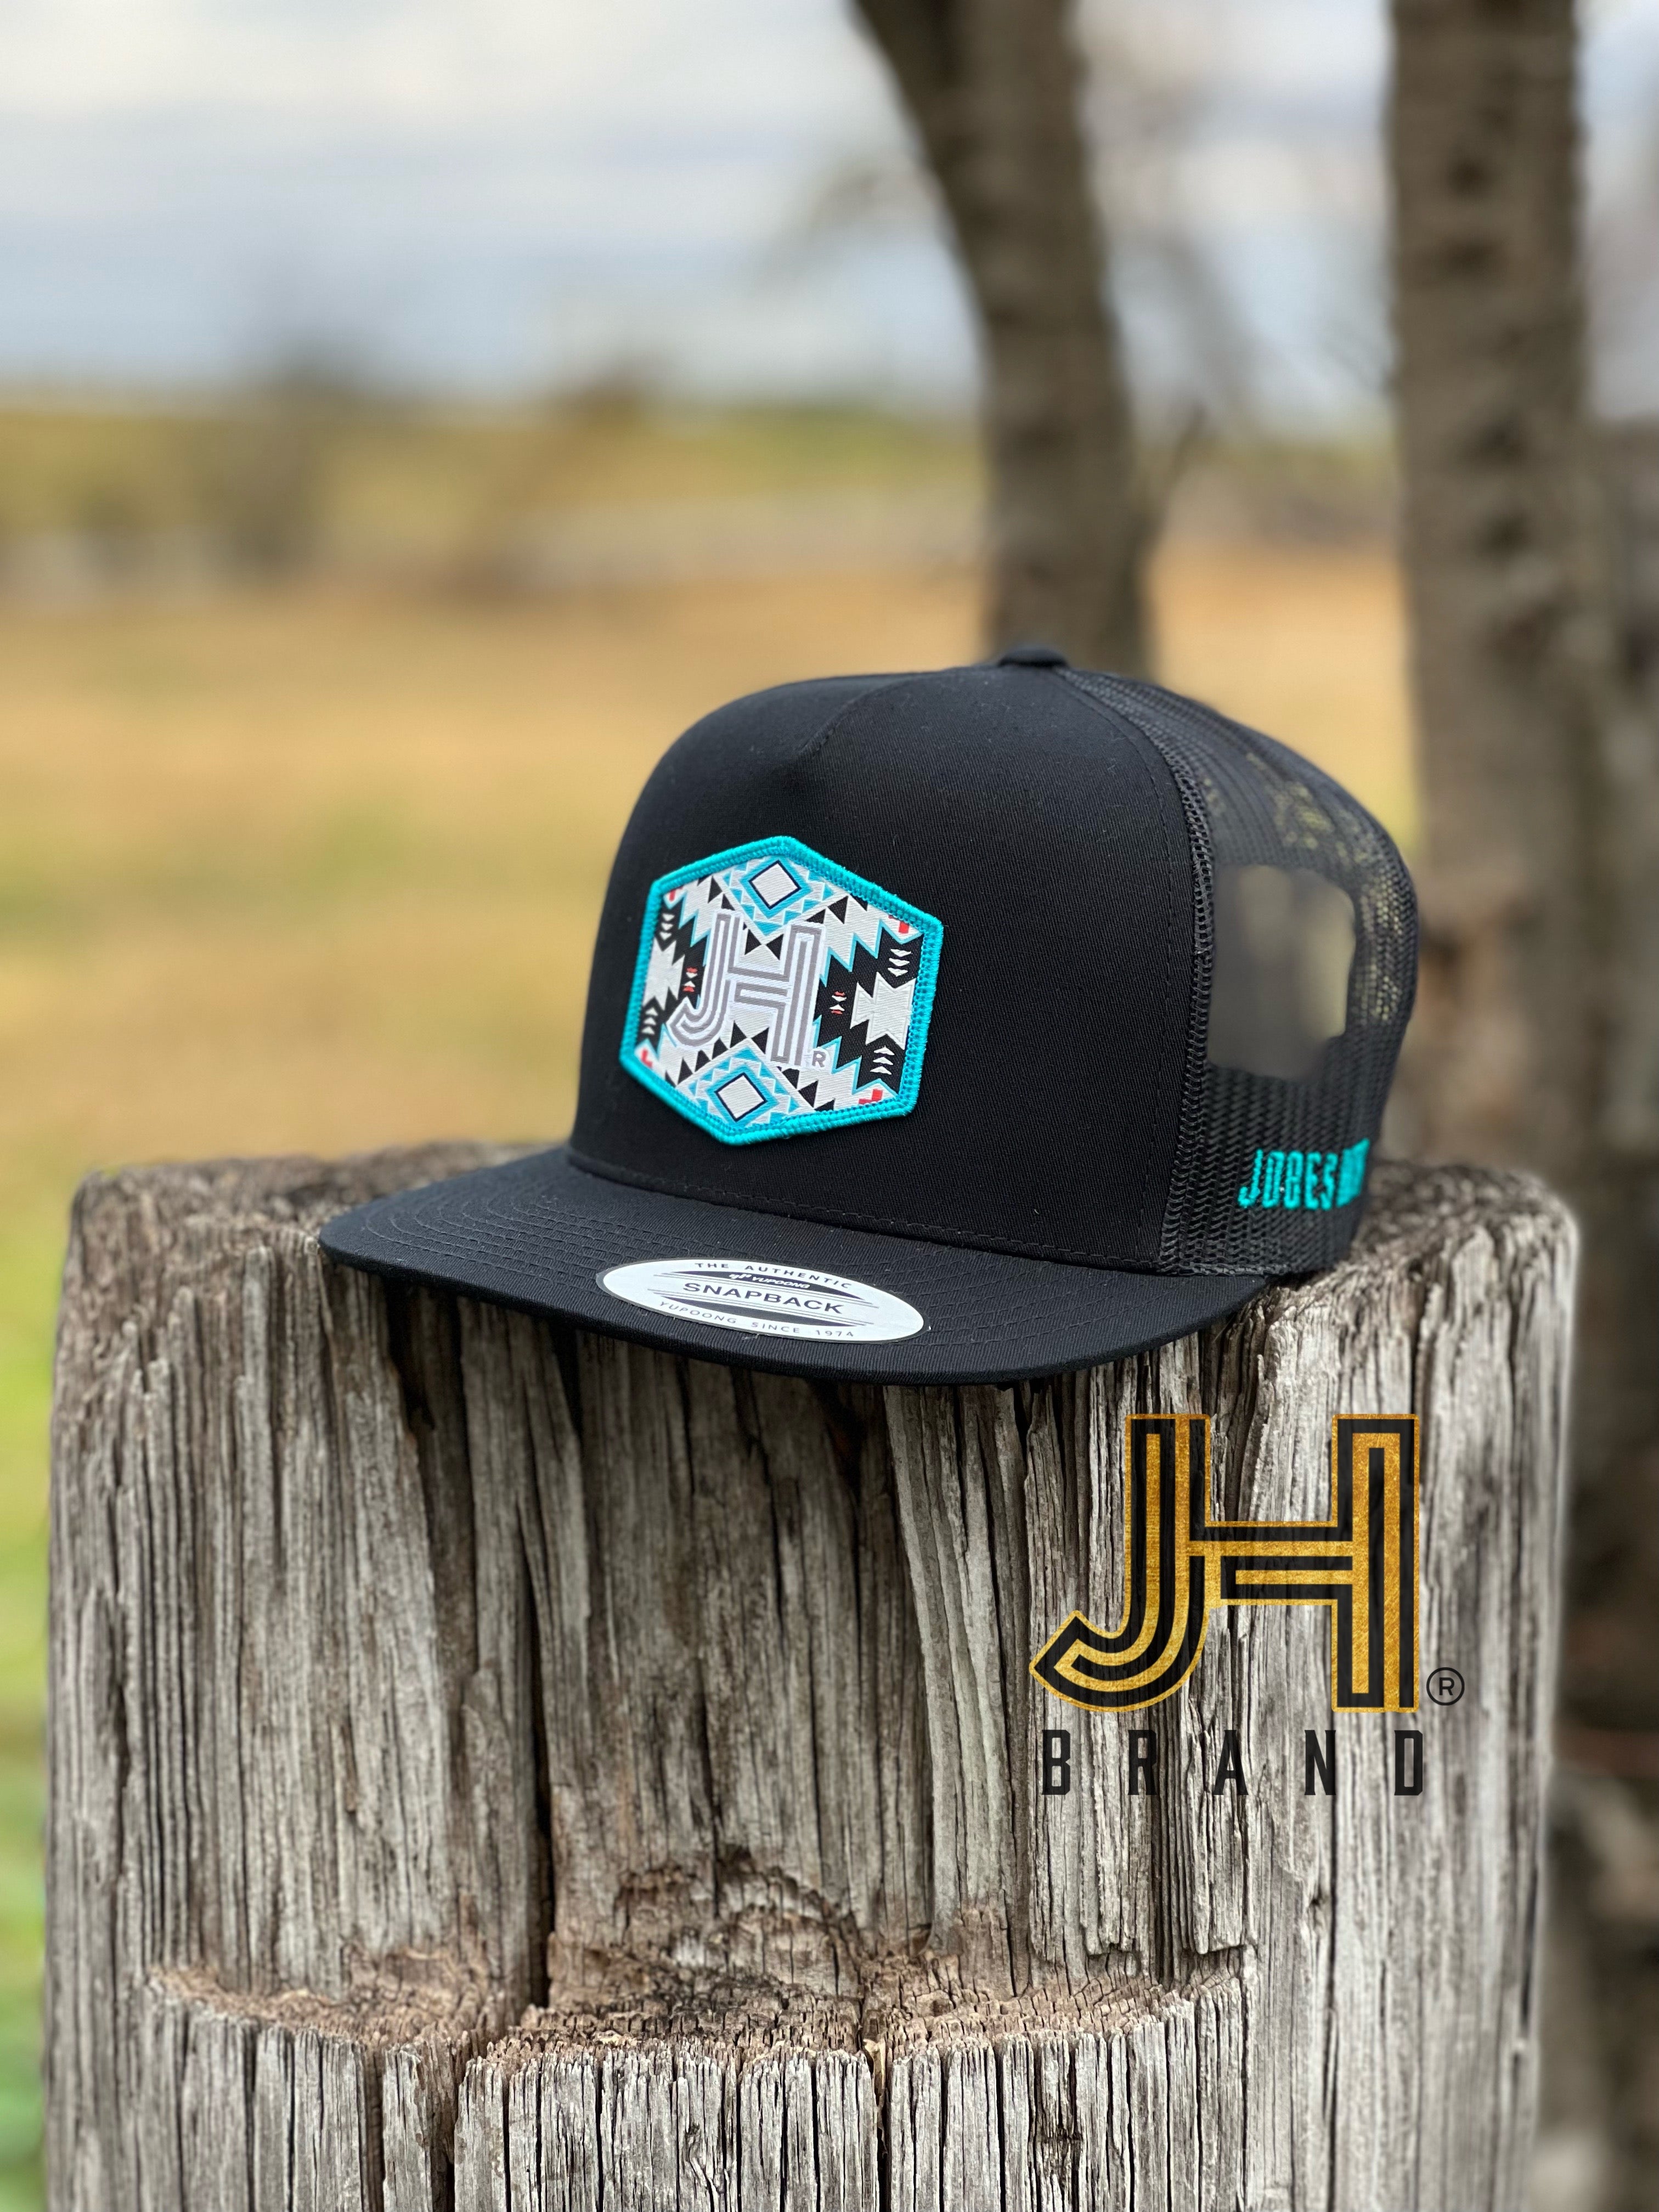 New 2022 Jobes Trucker Cap- All Black JH Turquoise Aztec Patch | Jobes Hats